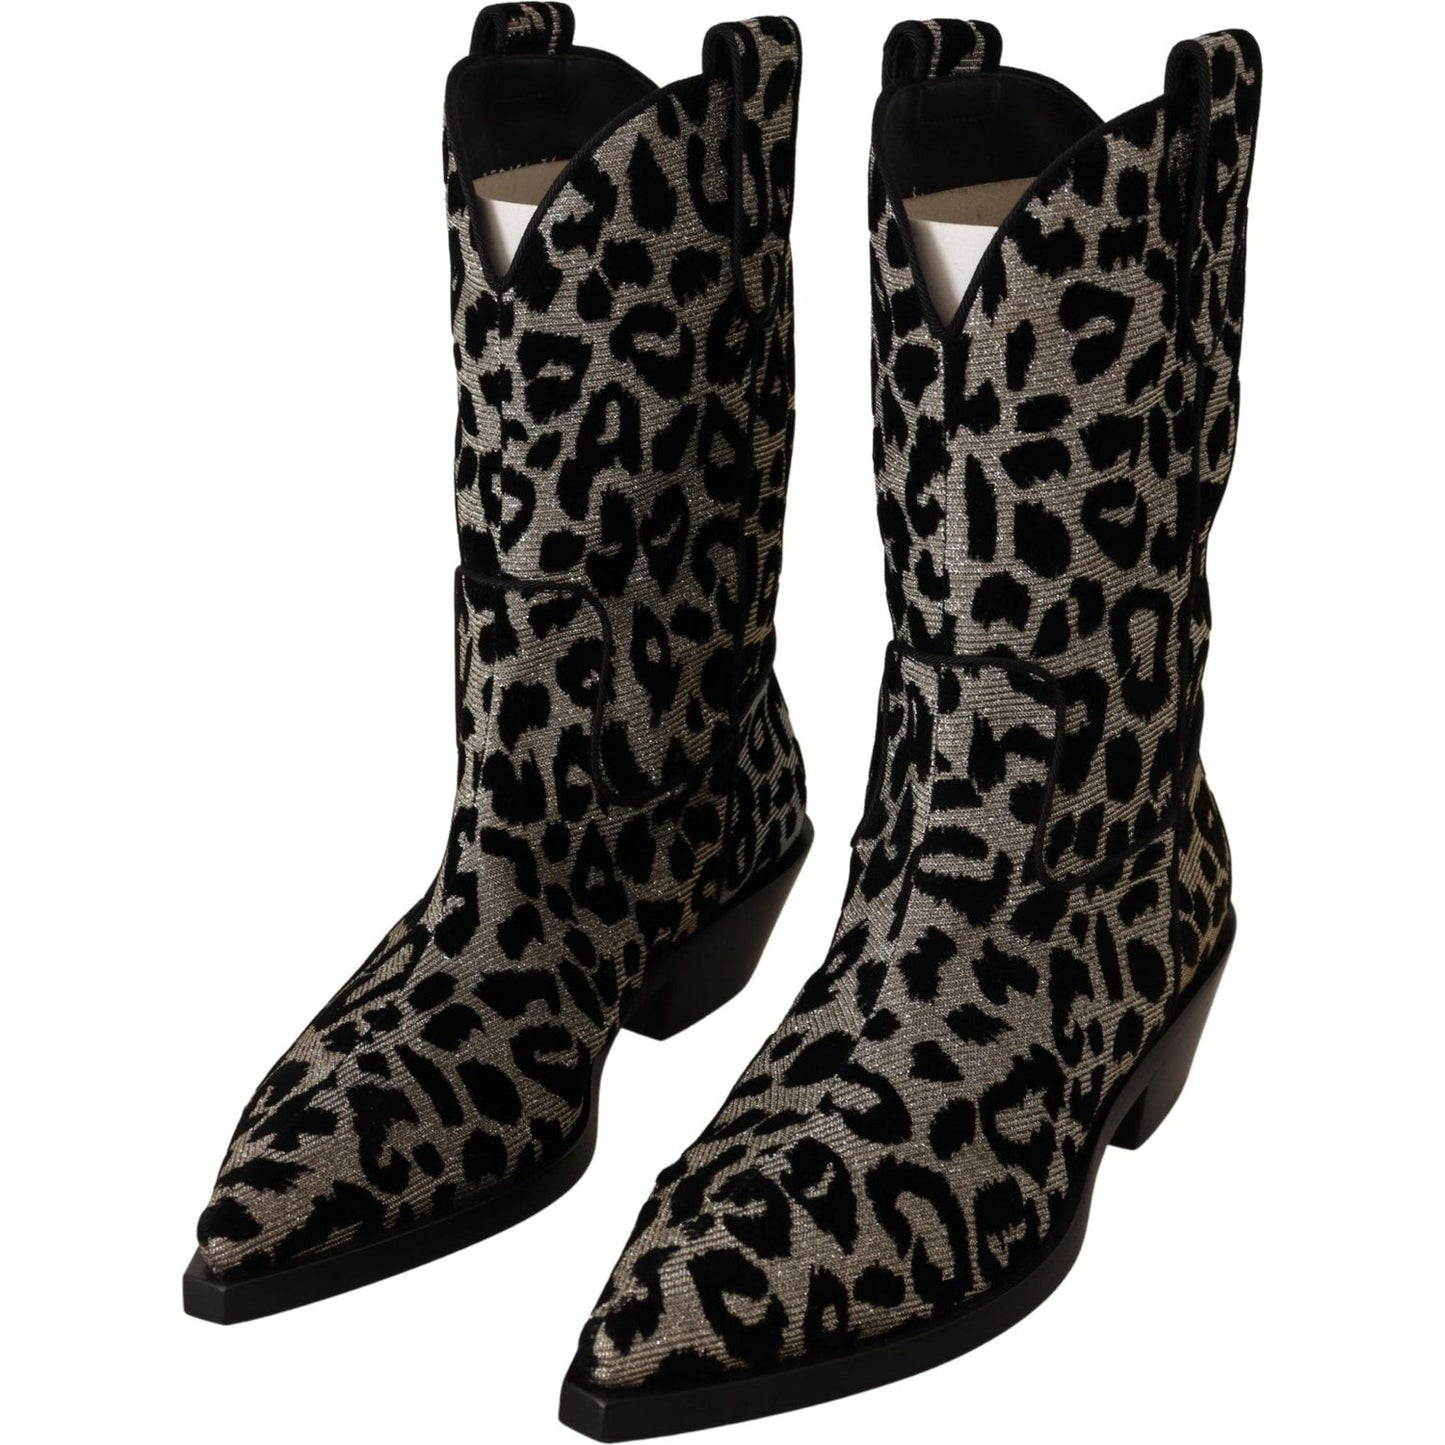 Dolce & Gabbana Elegant Leopard Print Mid Calf Boots gray-black-leopard-cowboy-boots-shoes IMG_6043-scaled-4be1796f-ef3.jpg